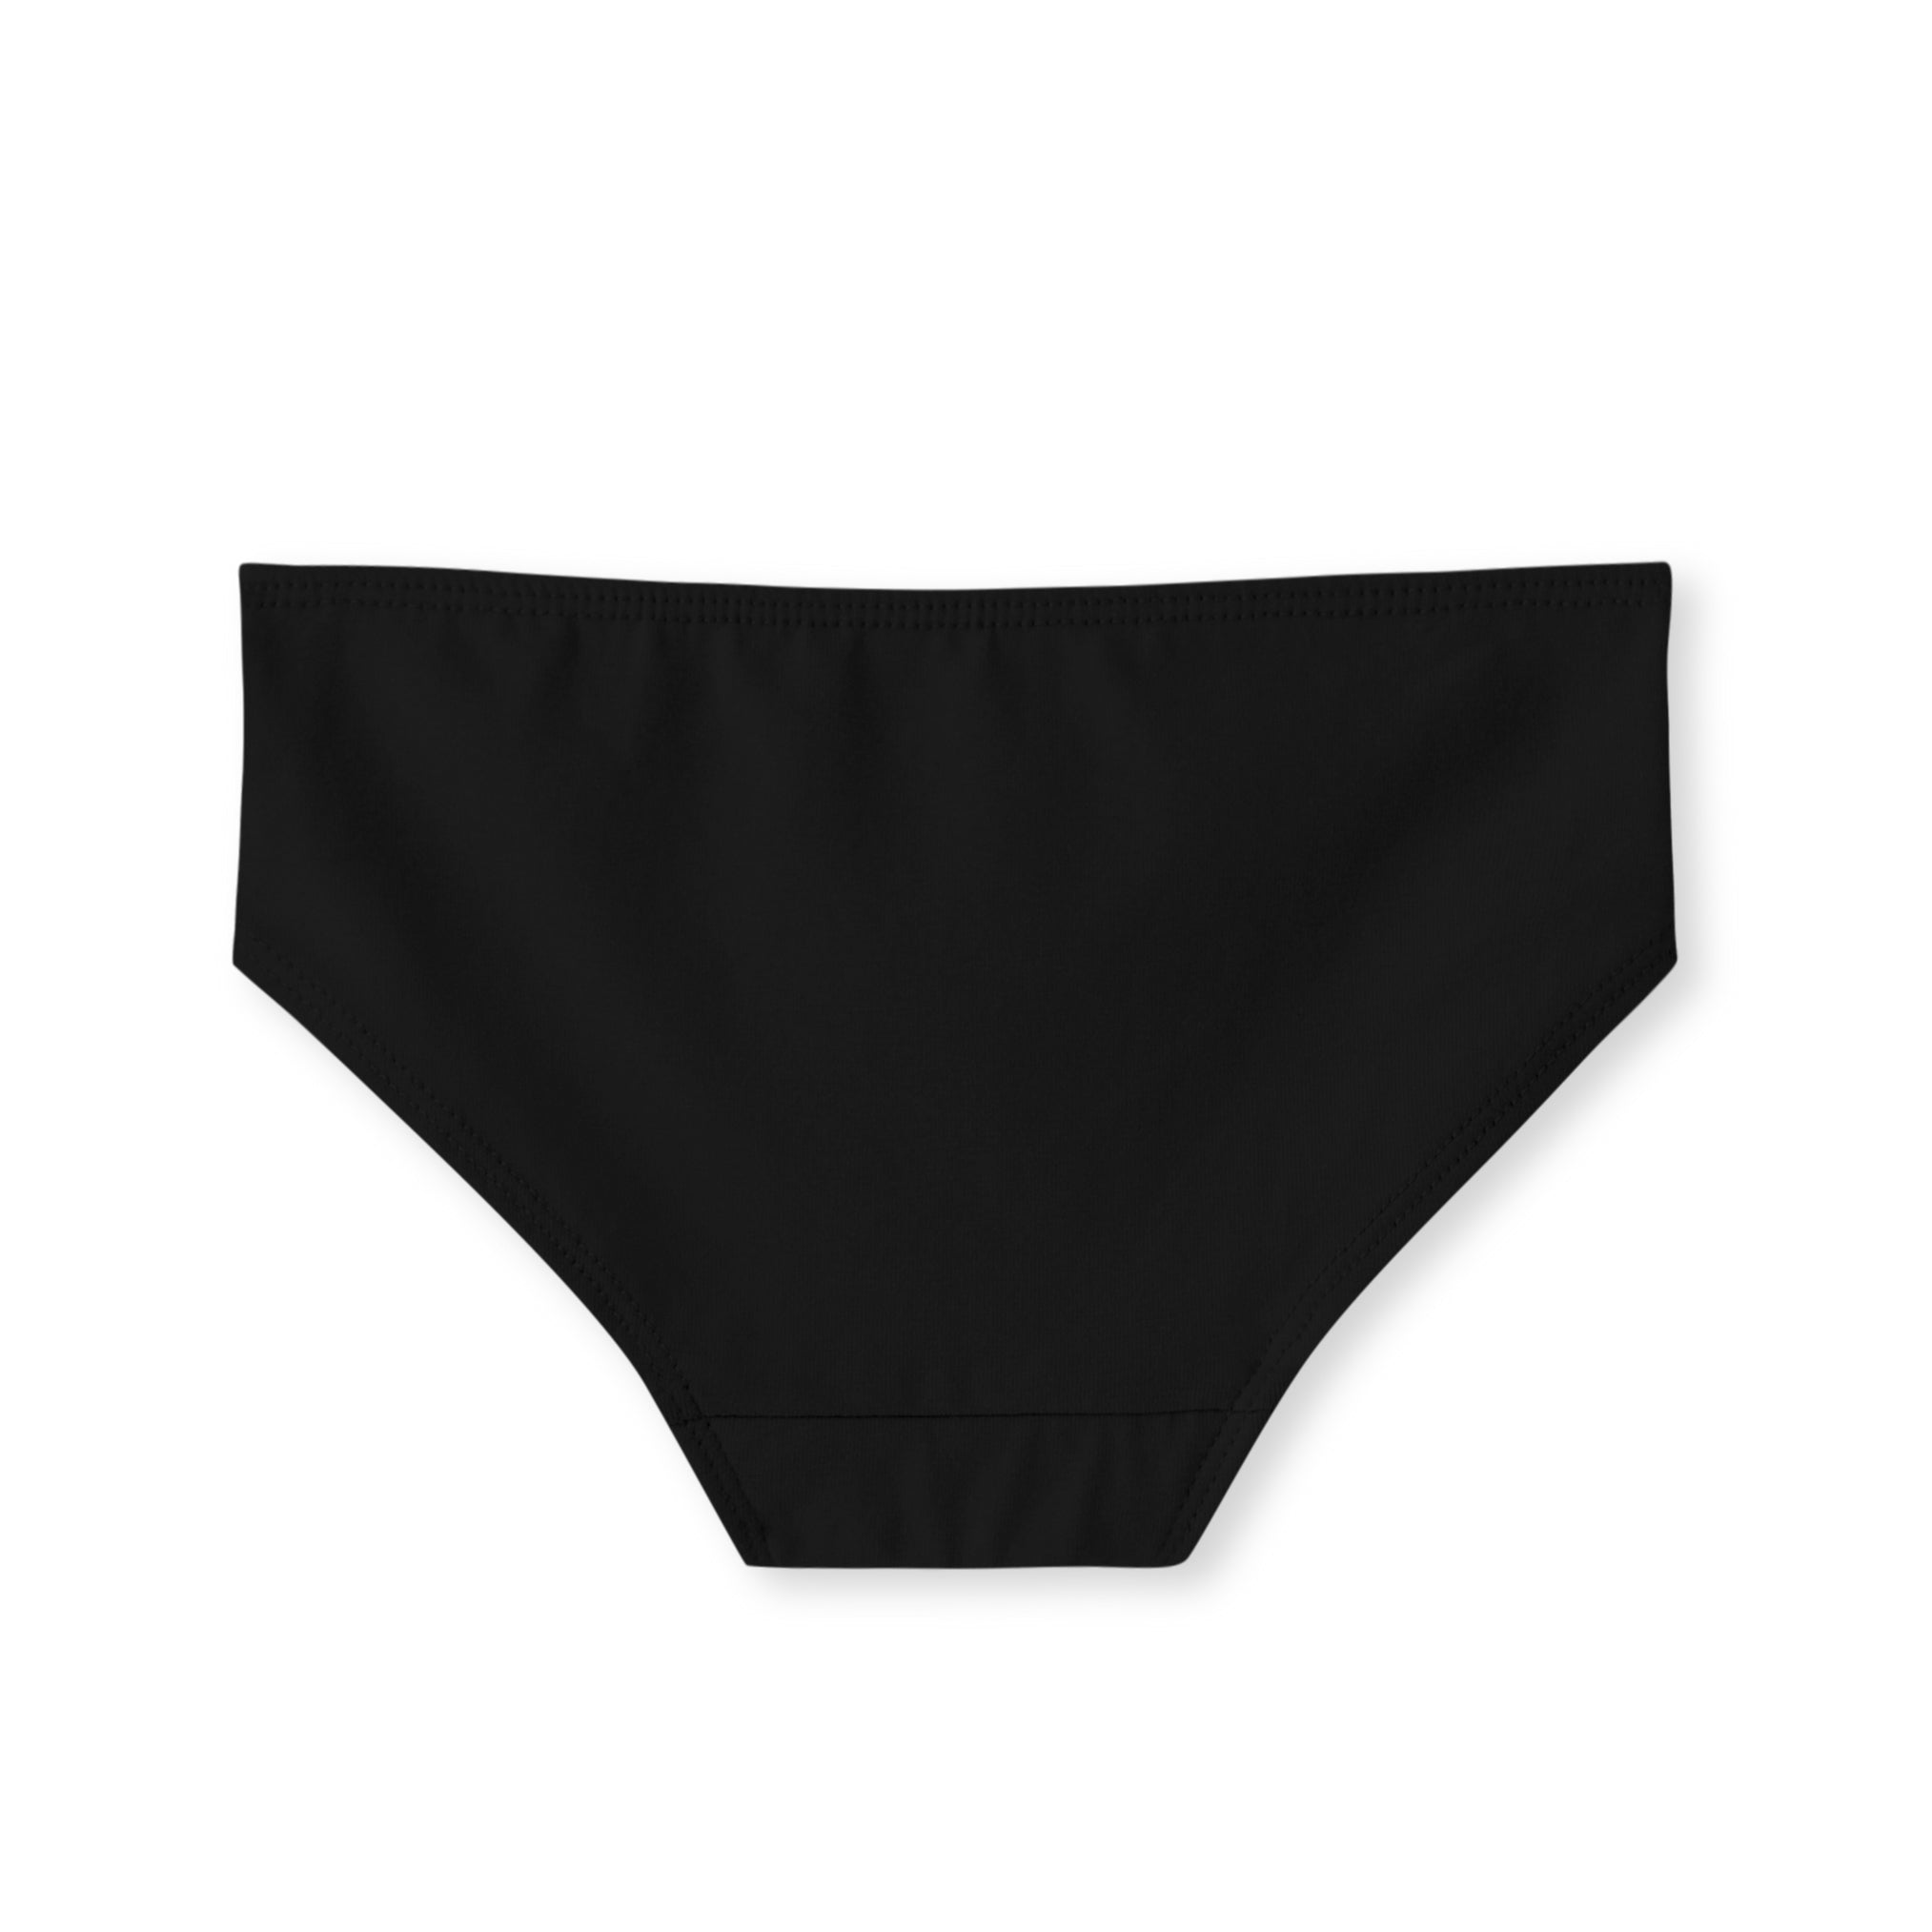 High waist nylon panties - Gem